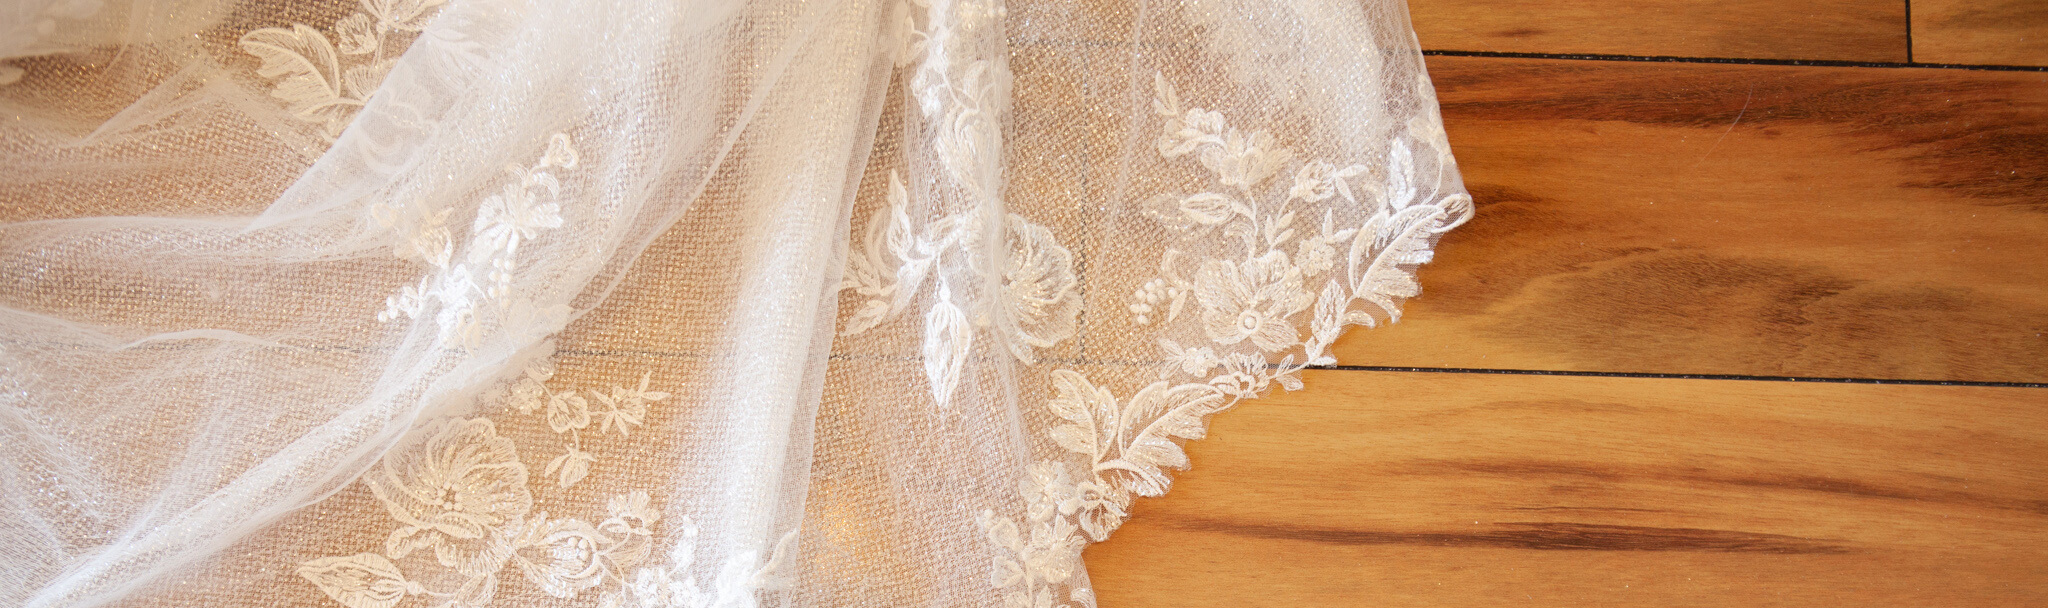 Bridal Dress on Wooden Floor. Desktop Image